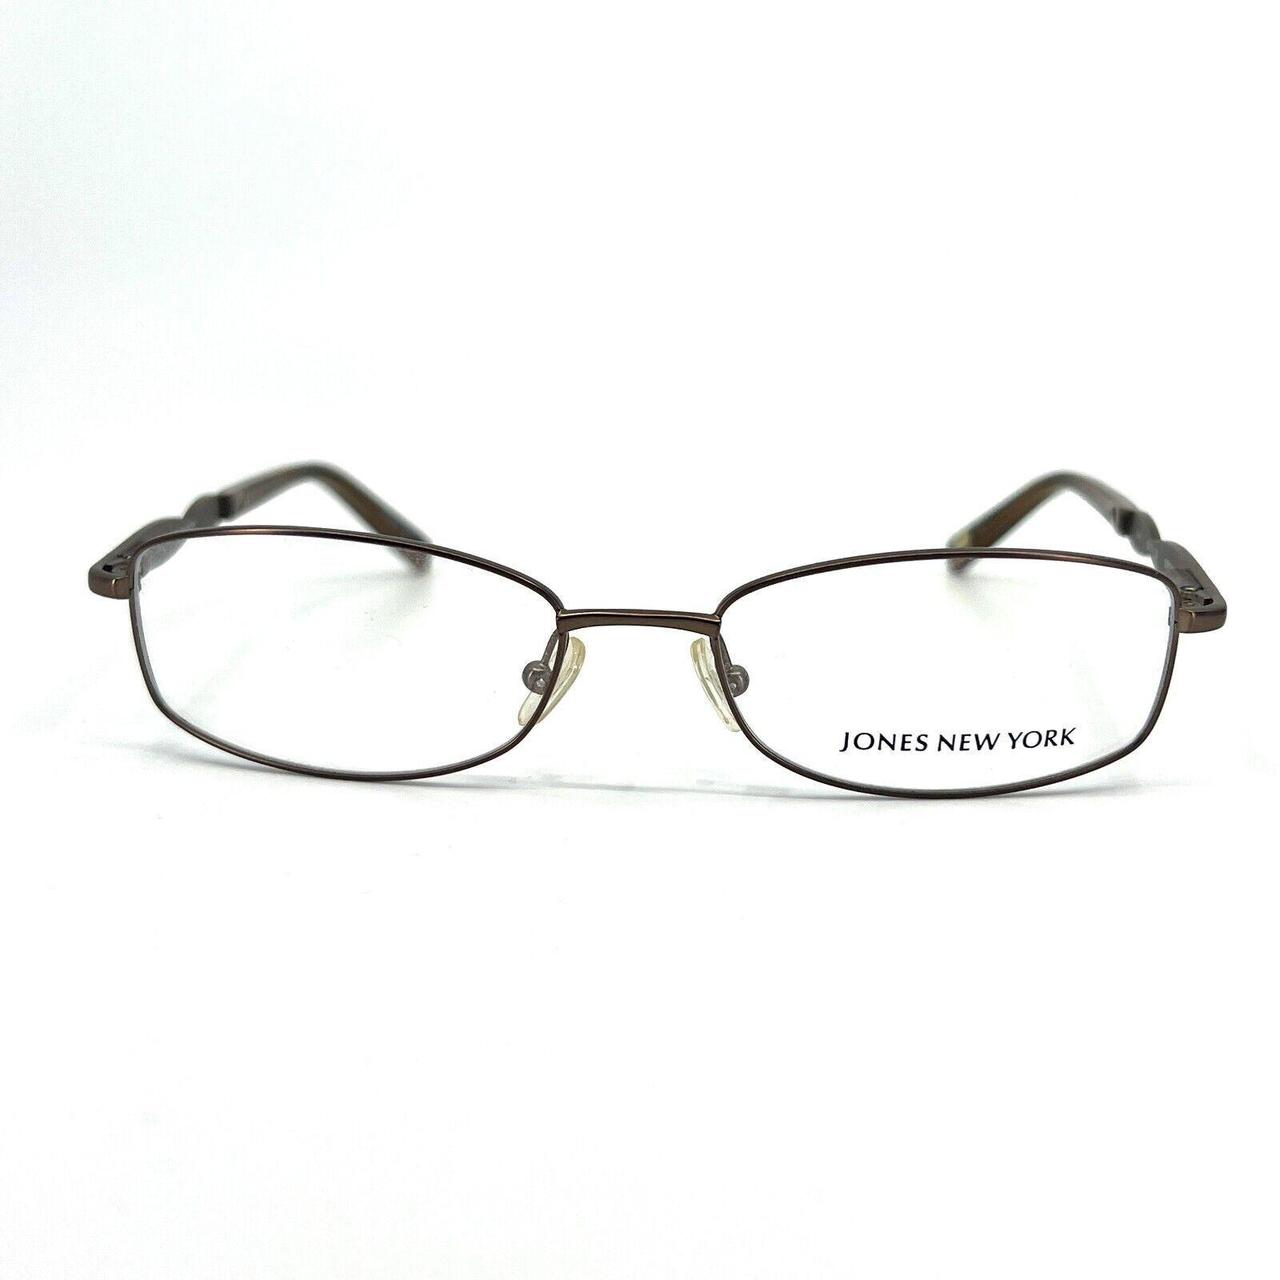 Jones New York Eyeglasses Frames J470 BROWN... - Depop